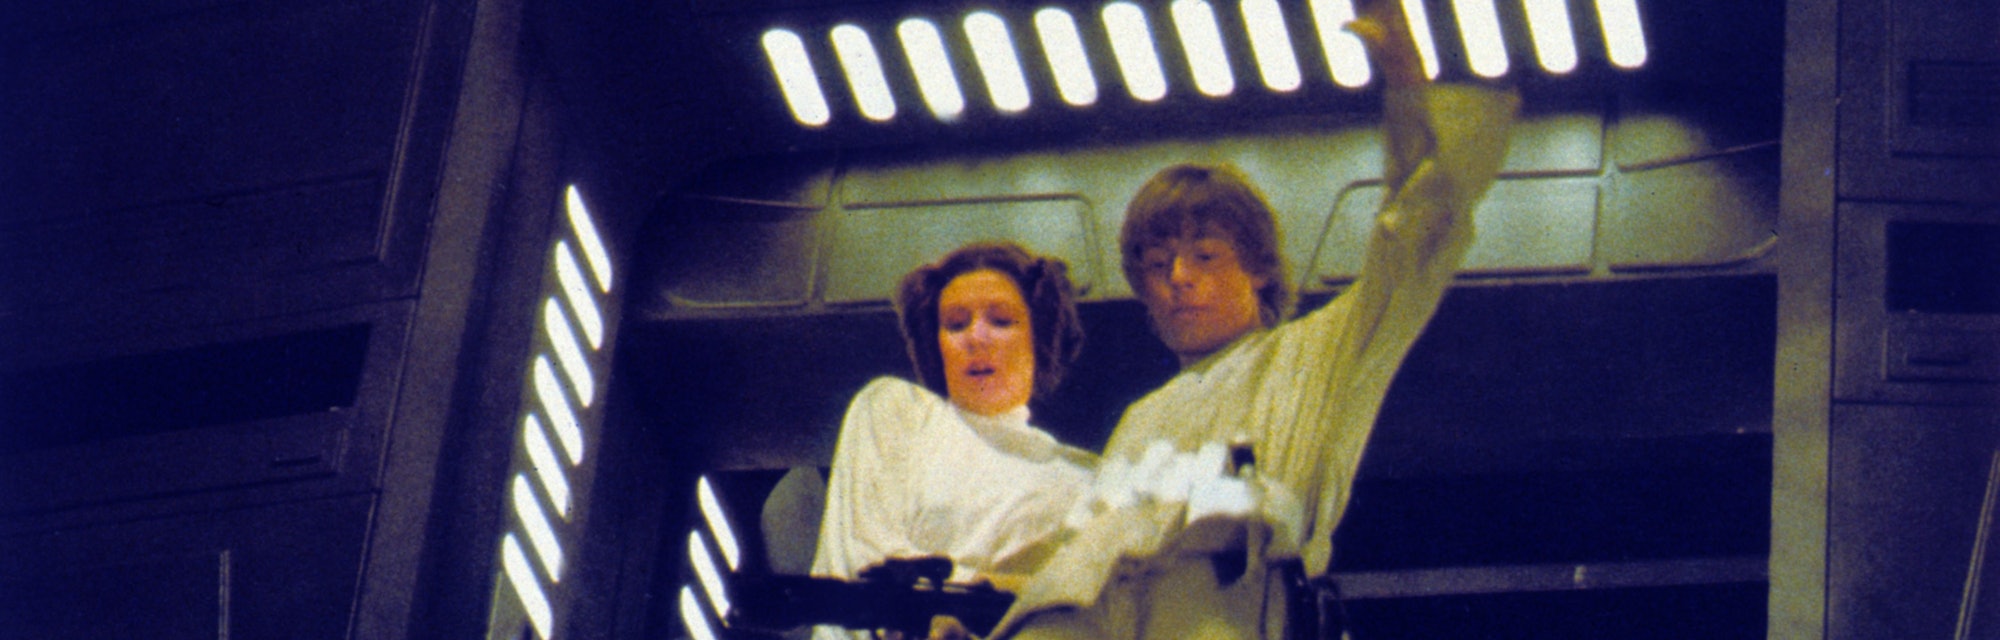 Star Wars: Episode Iv-a New Hope, lobbycard, German lobbycard, l-r: Carrie Fisher, Mark Hamill, 1977...